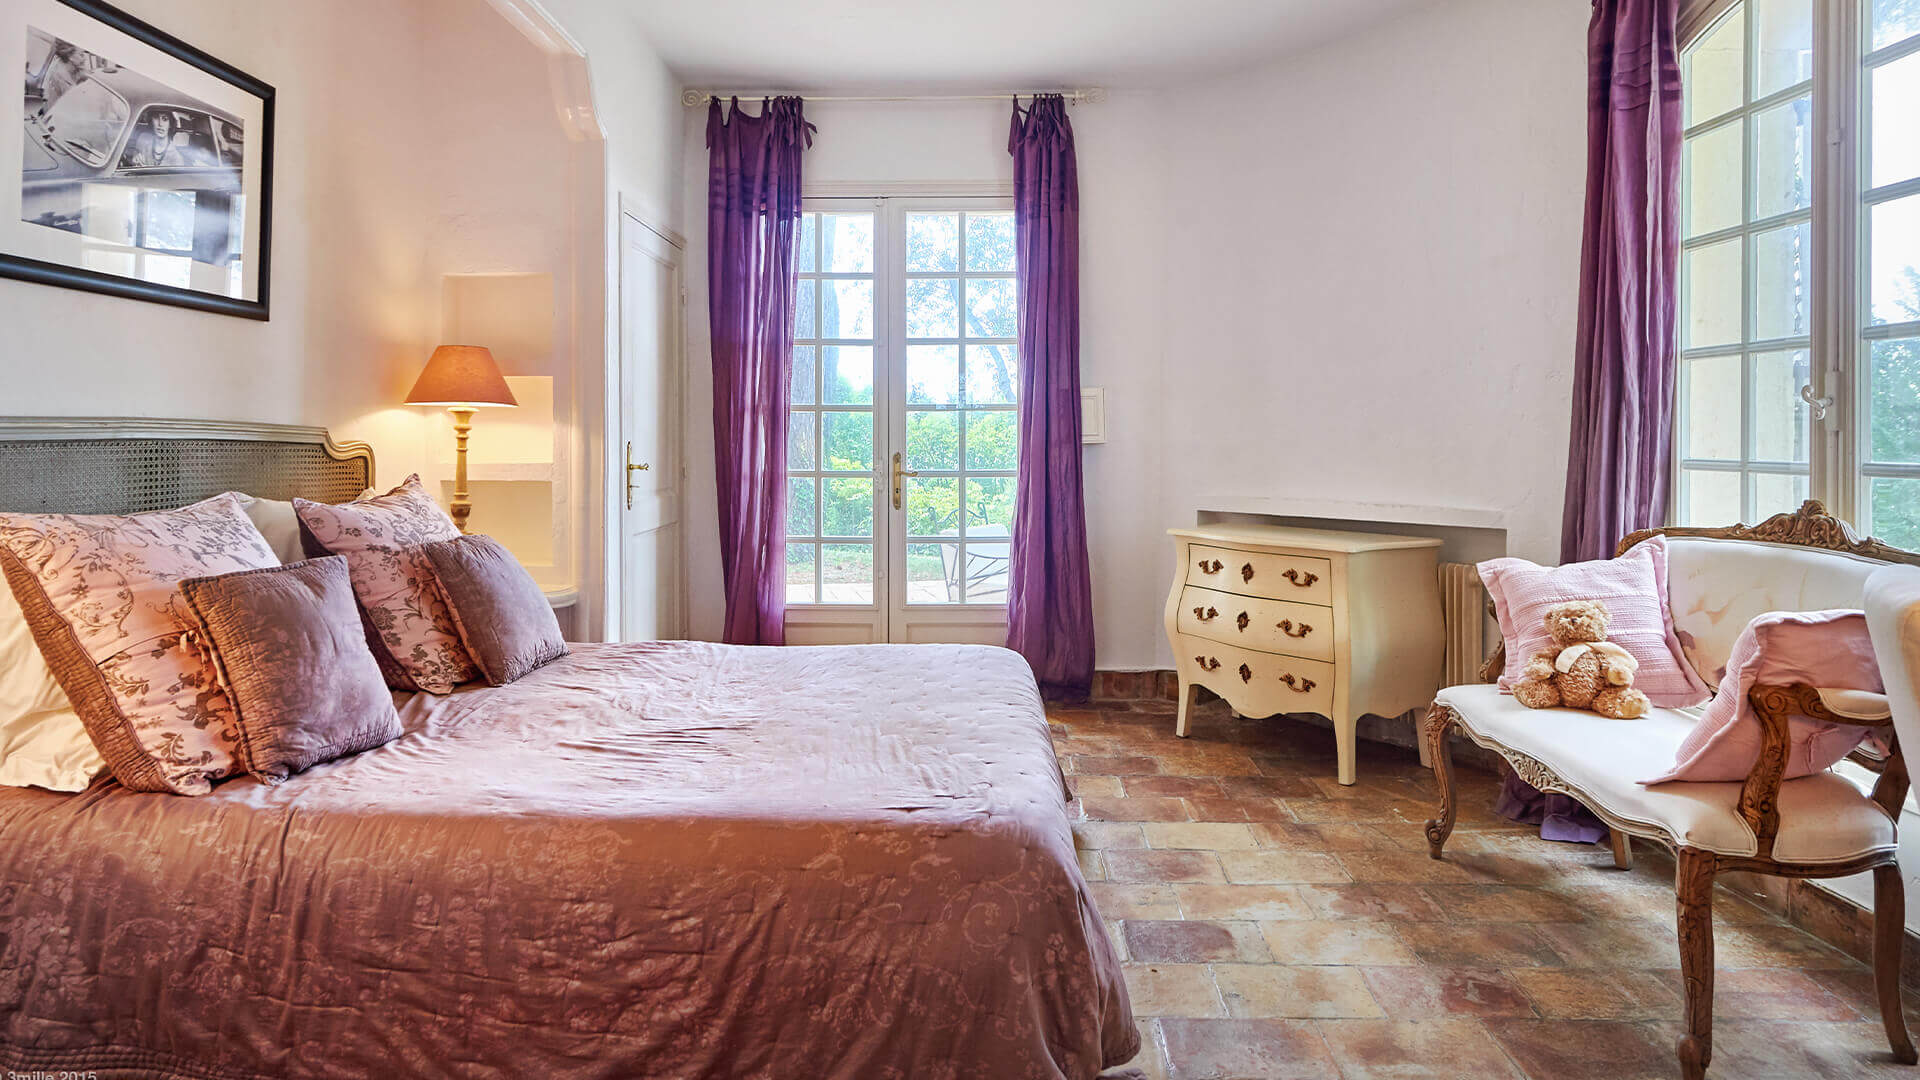 Bastide in Mougins renaissance bedroom